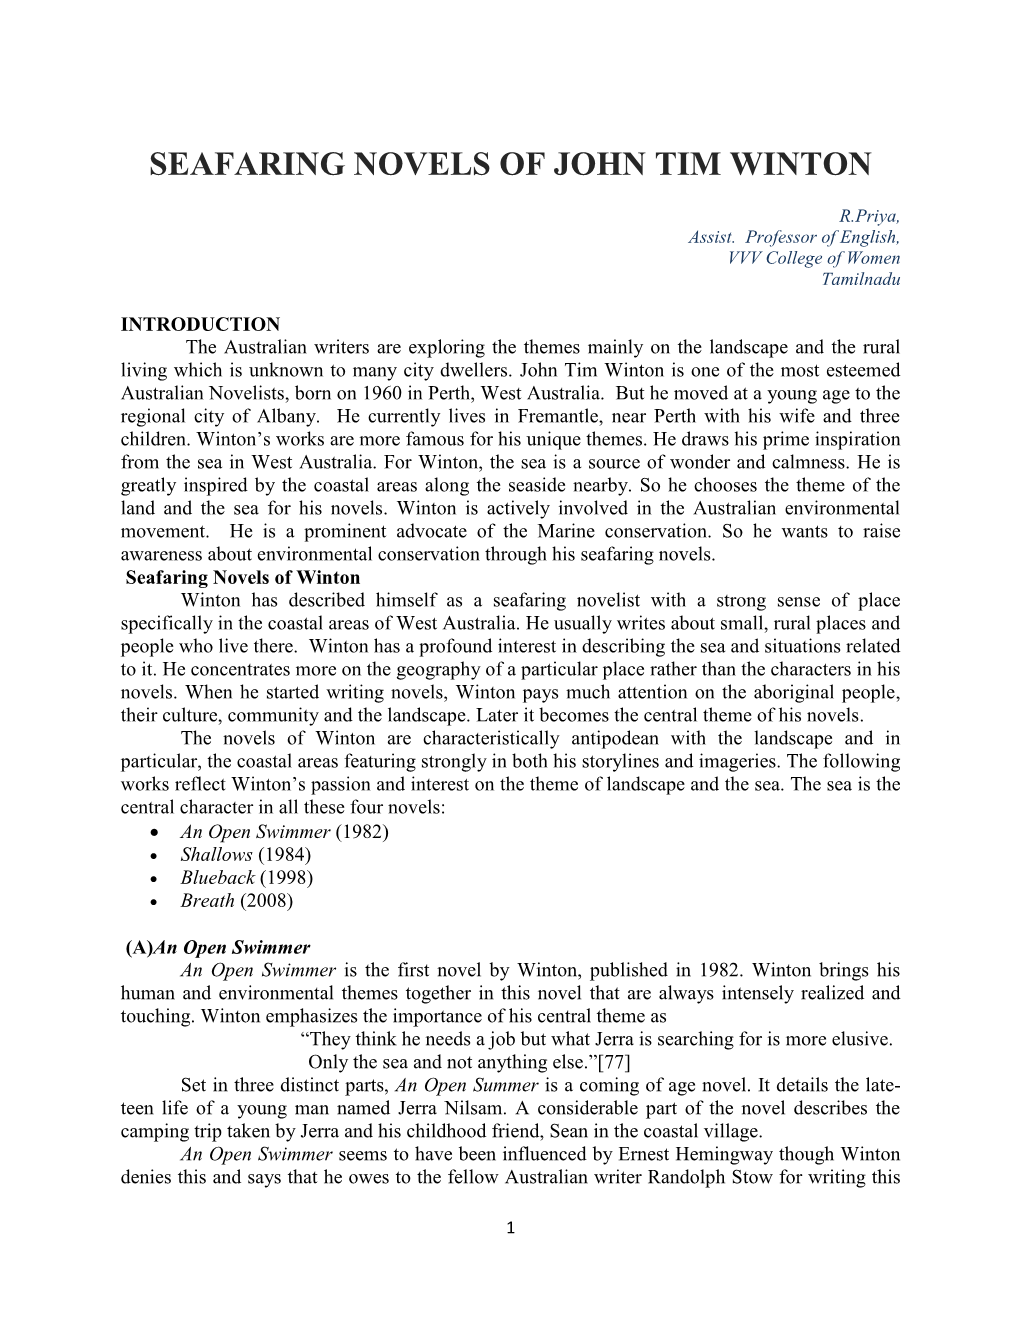 Seafaring Novels of John Tim Winton